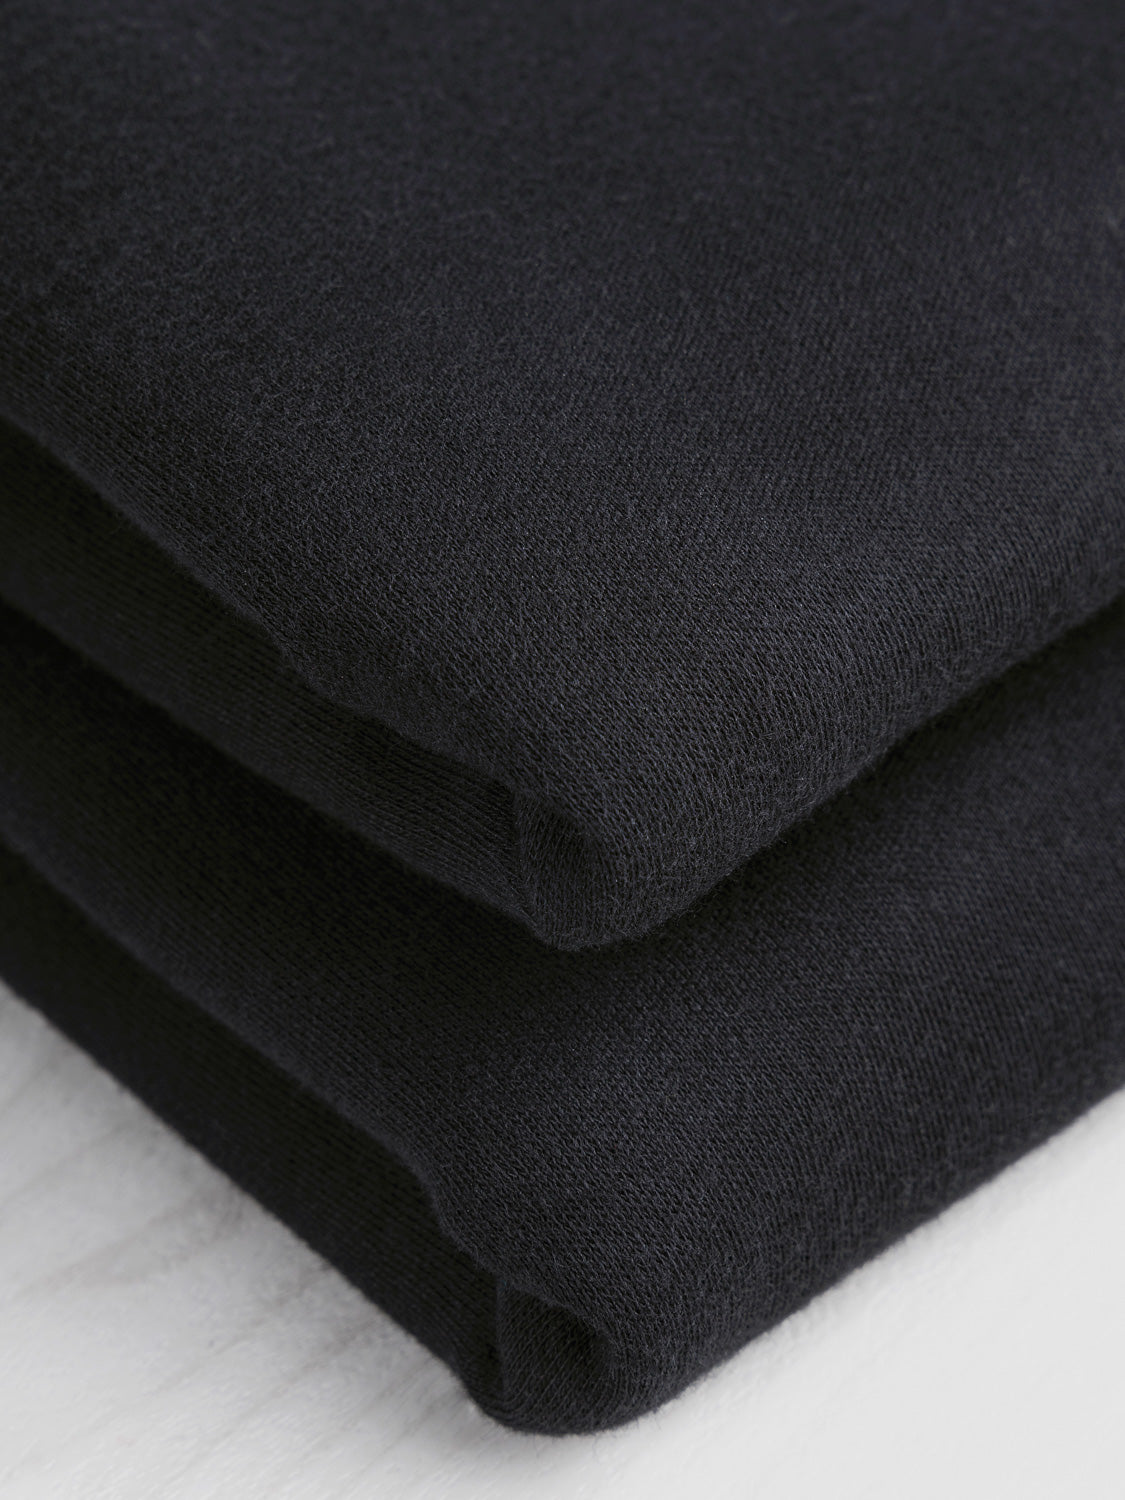 Black #U58 Crinkle Jersey Knit Fabric SKU #7153